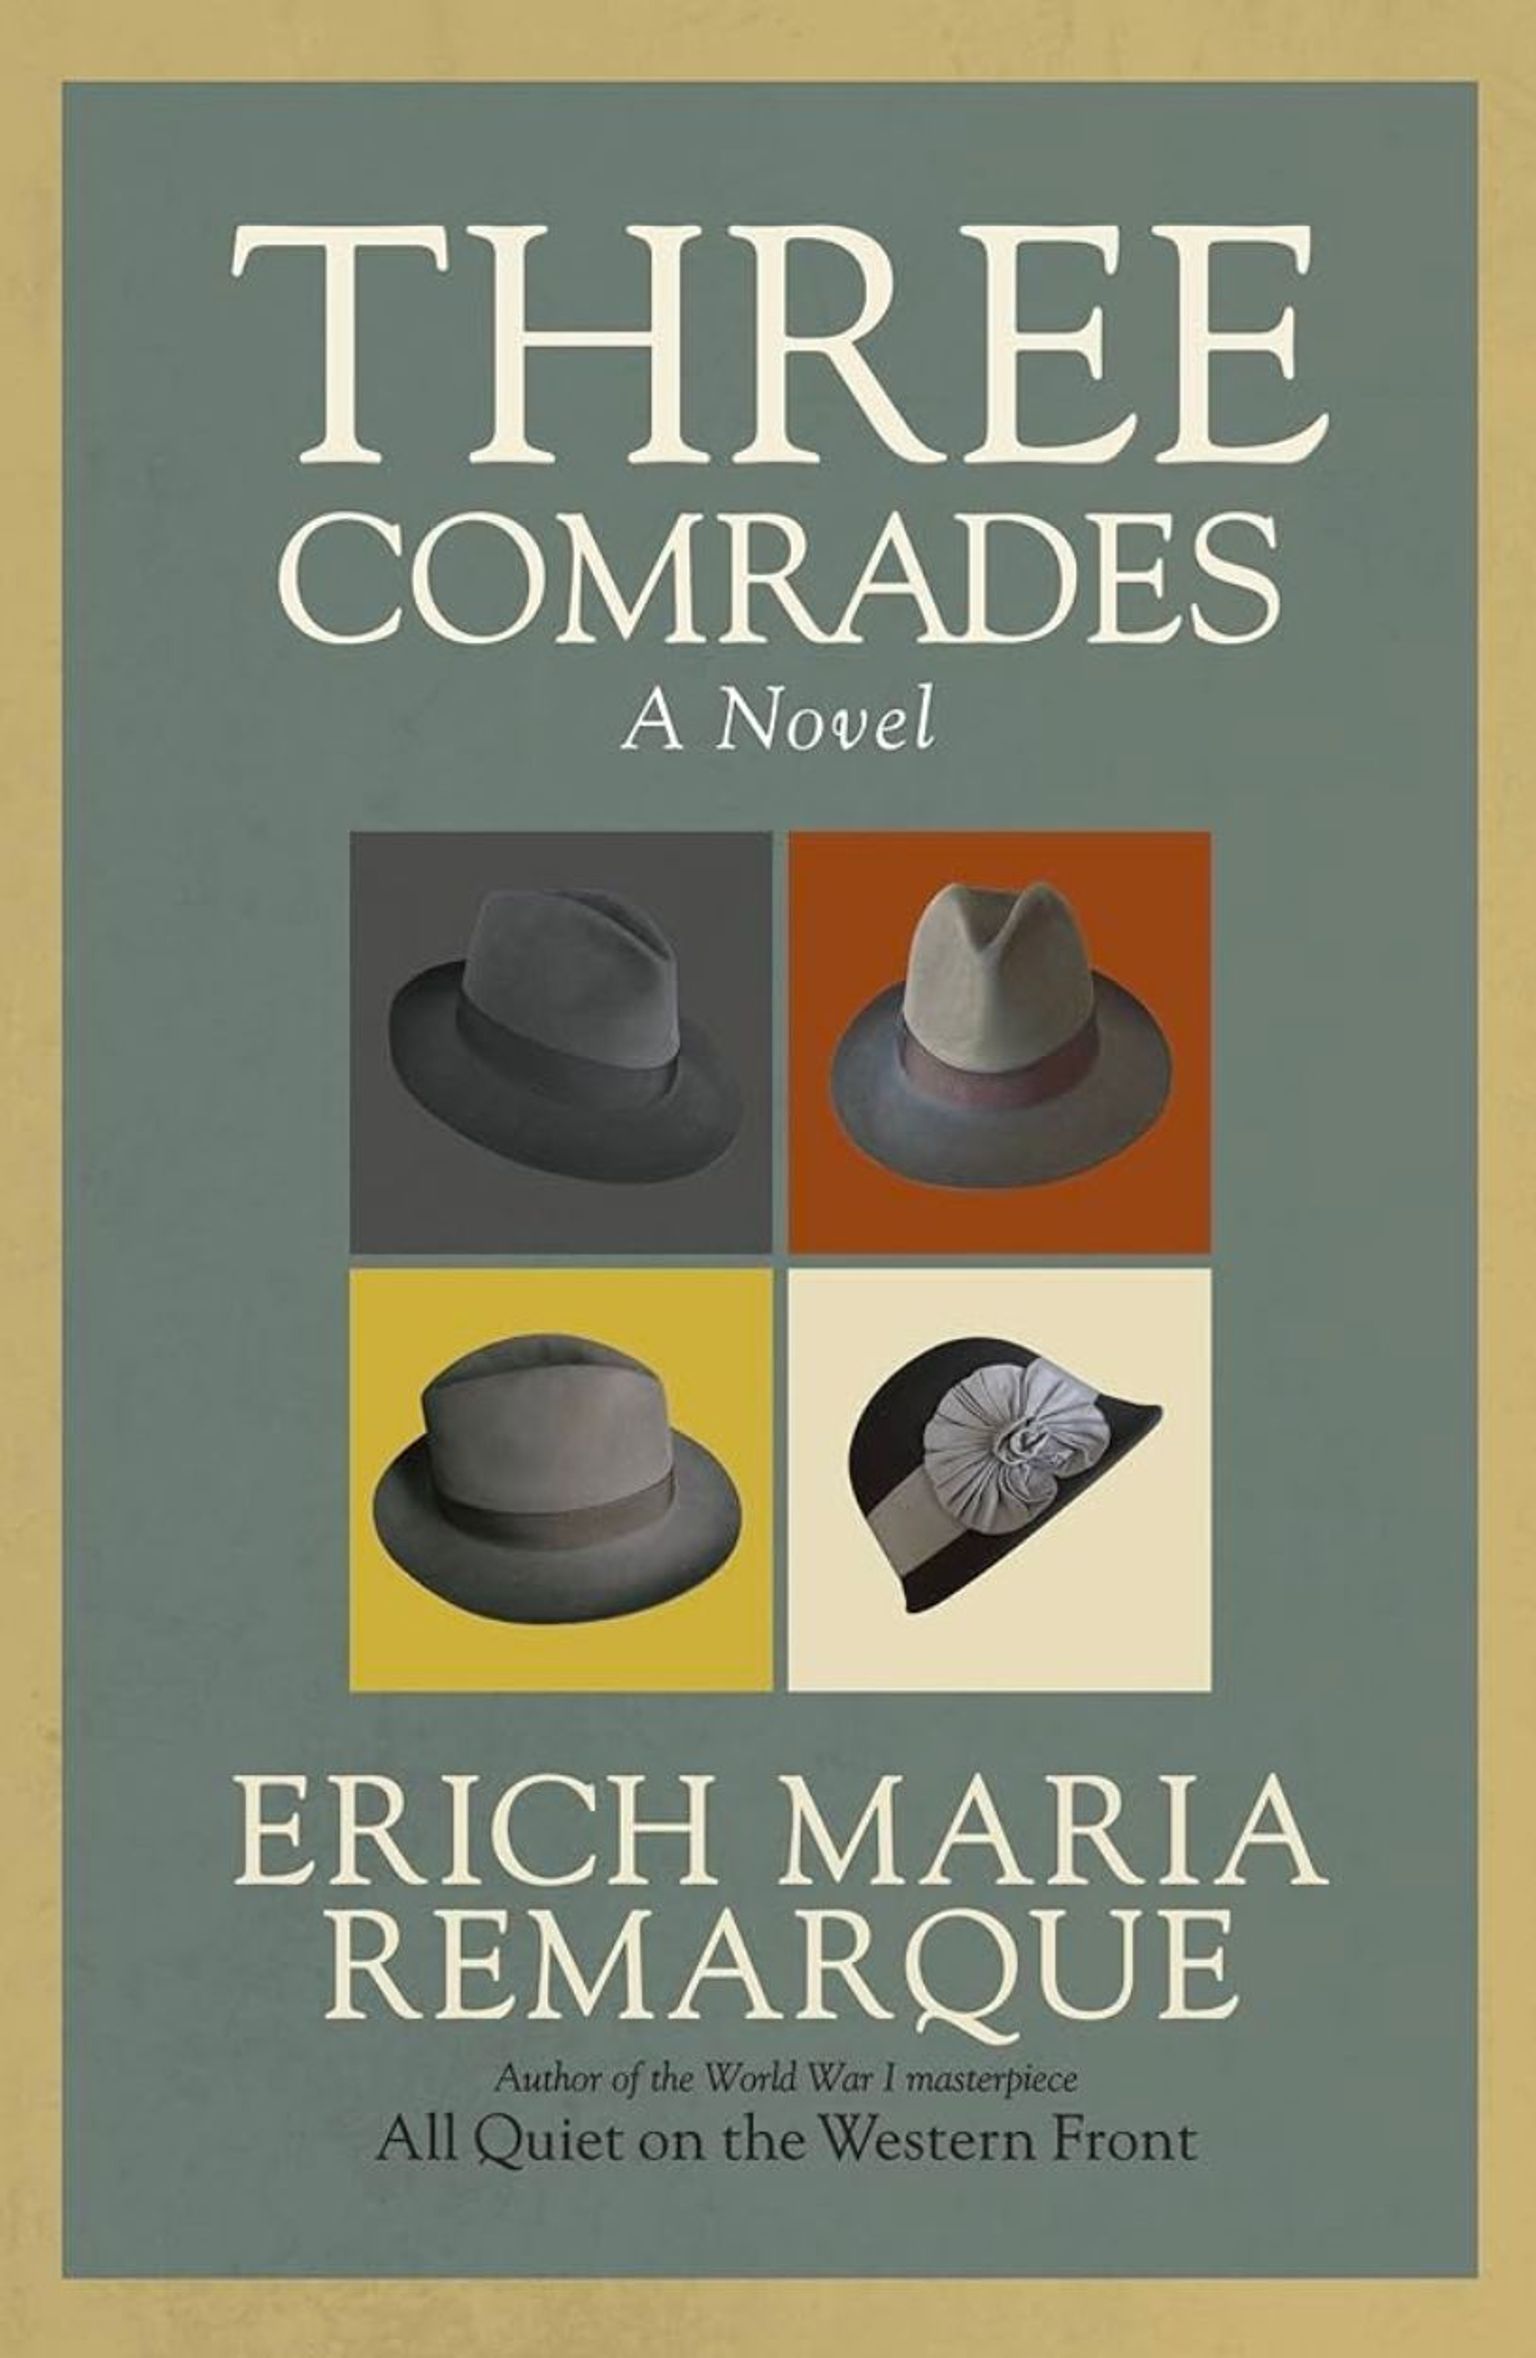 Book Recommendations - Three Comrades